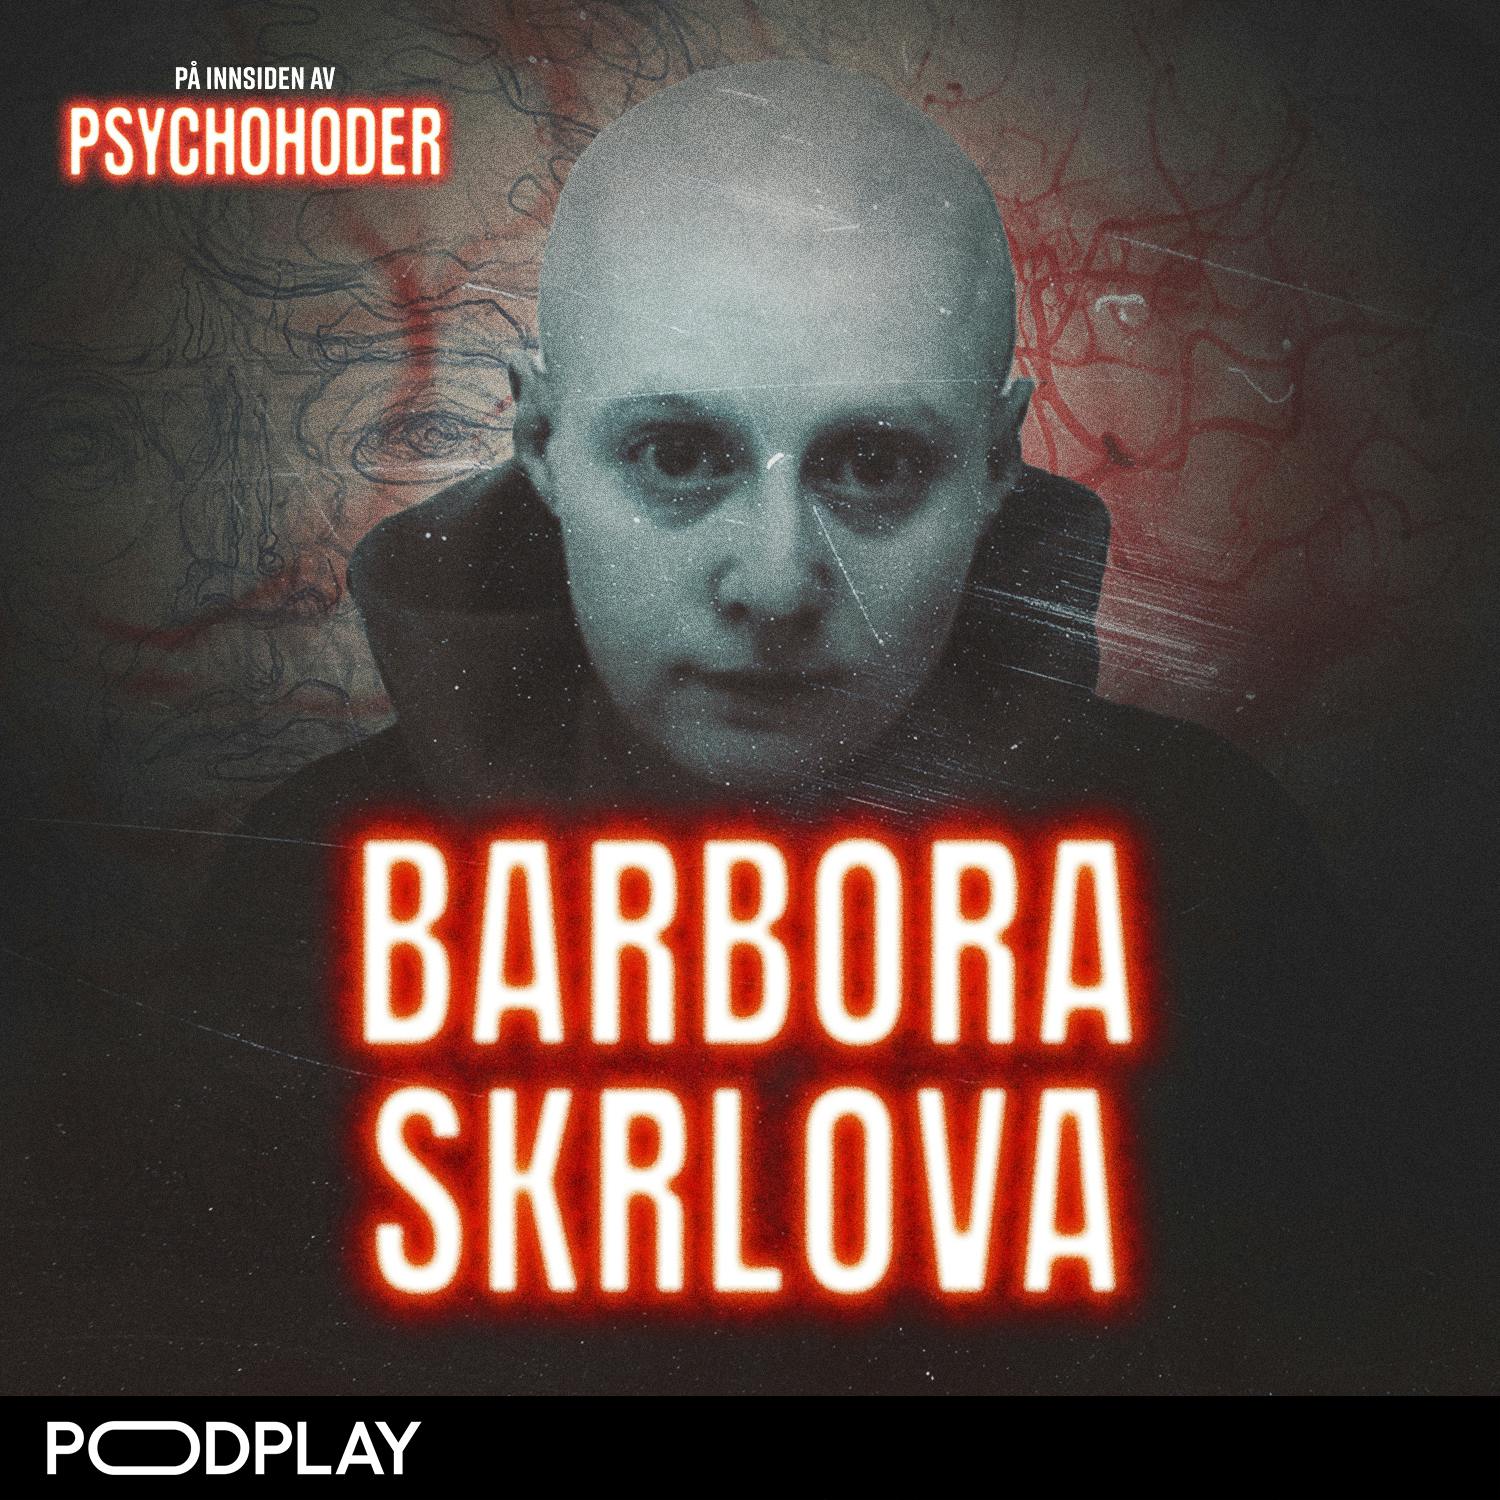 Barbora Skrlova – var ”Adam” offer eller overgriper?